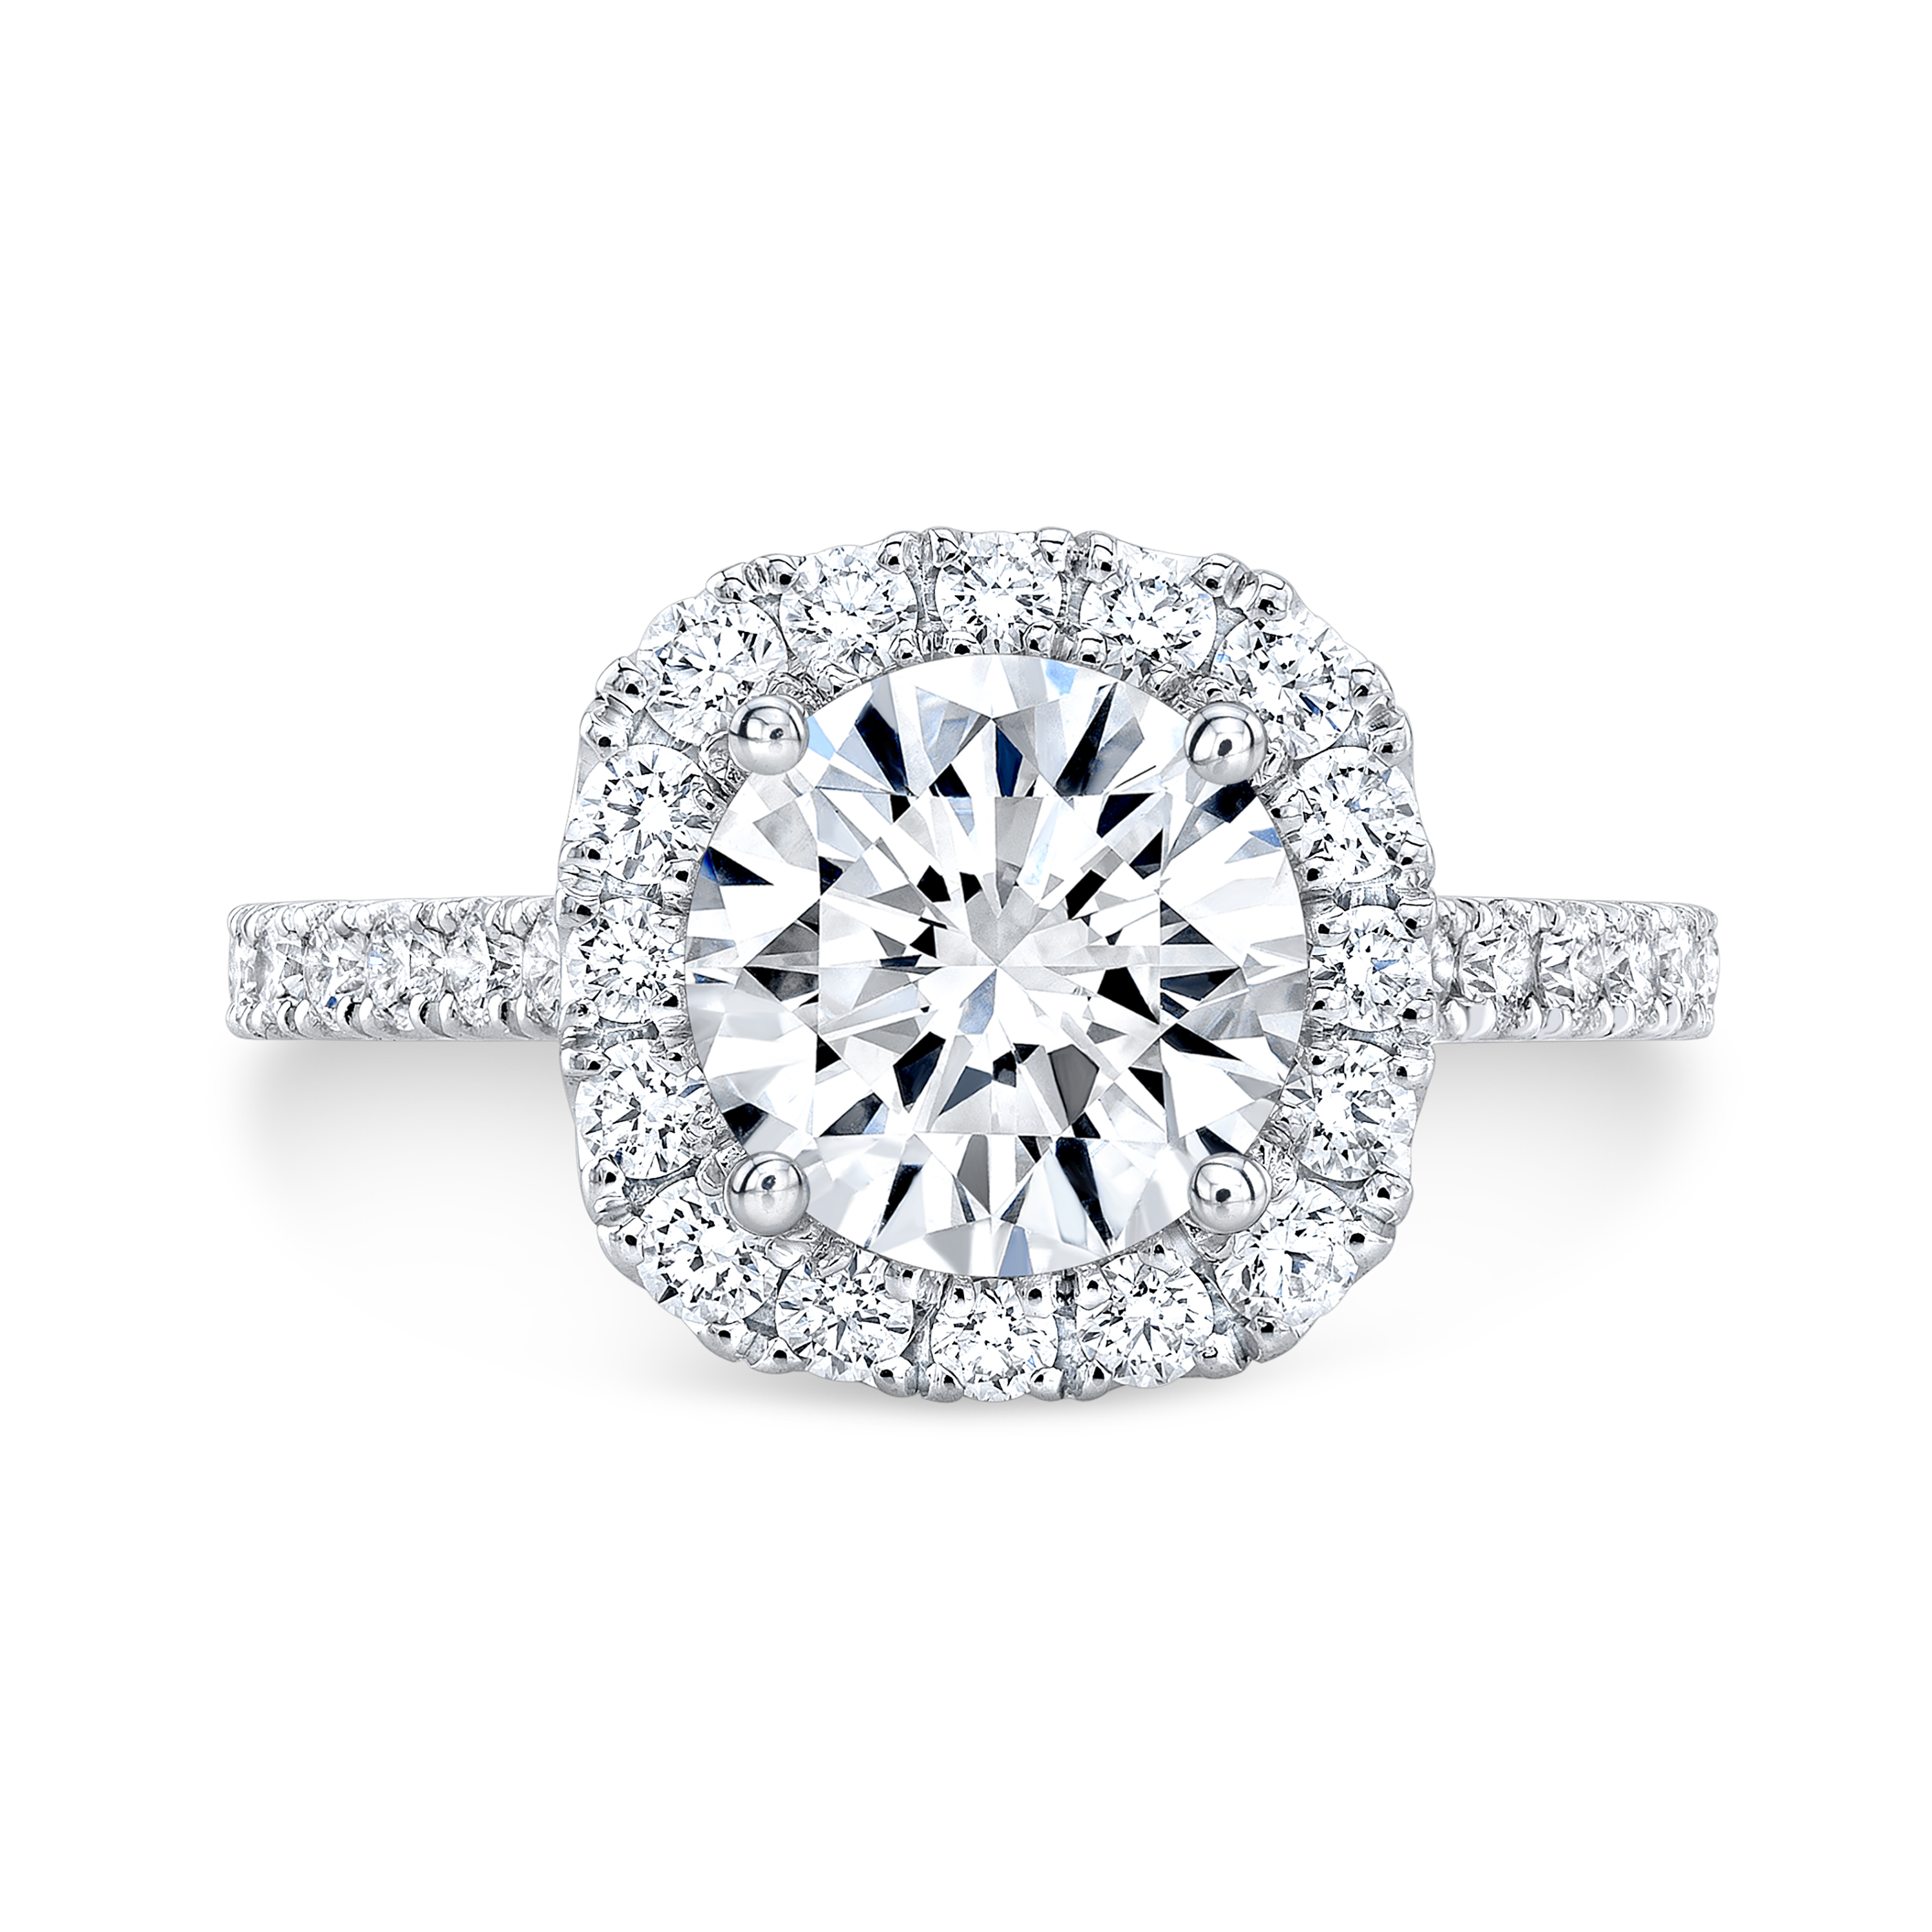 1.50 Carat Emerald Cut Moissanite and Diamond Halo Wedding Ring Set in —  kisnagems.co.uk